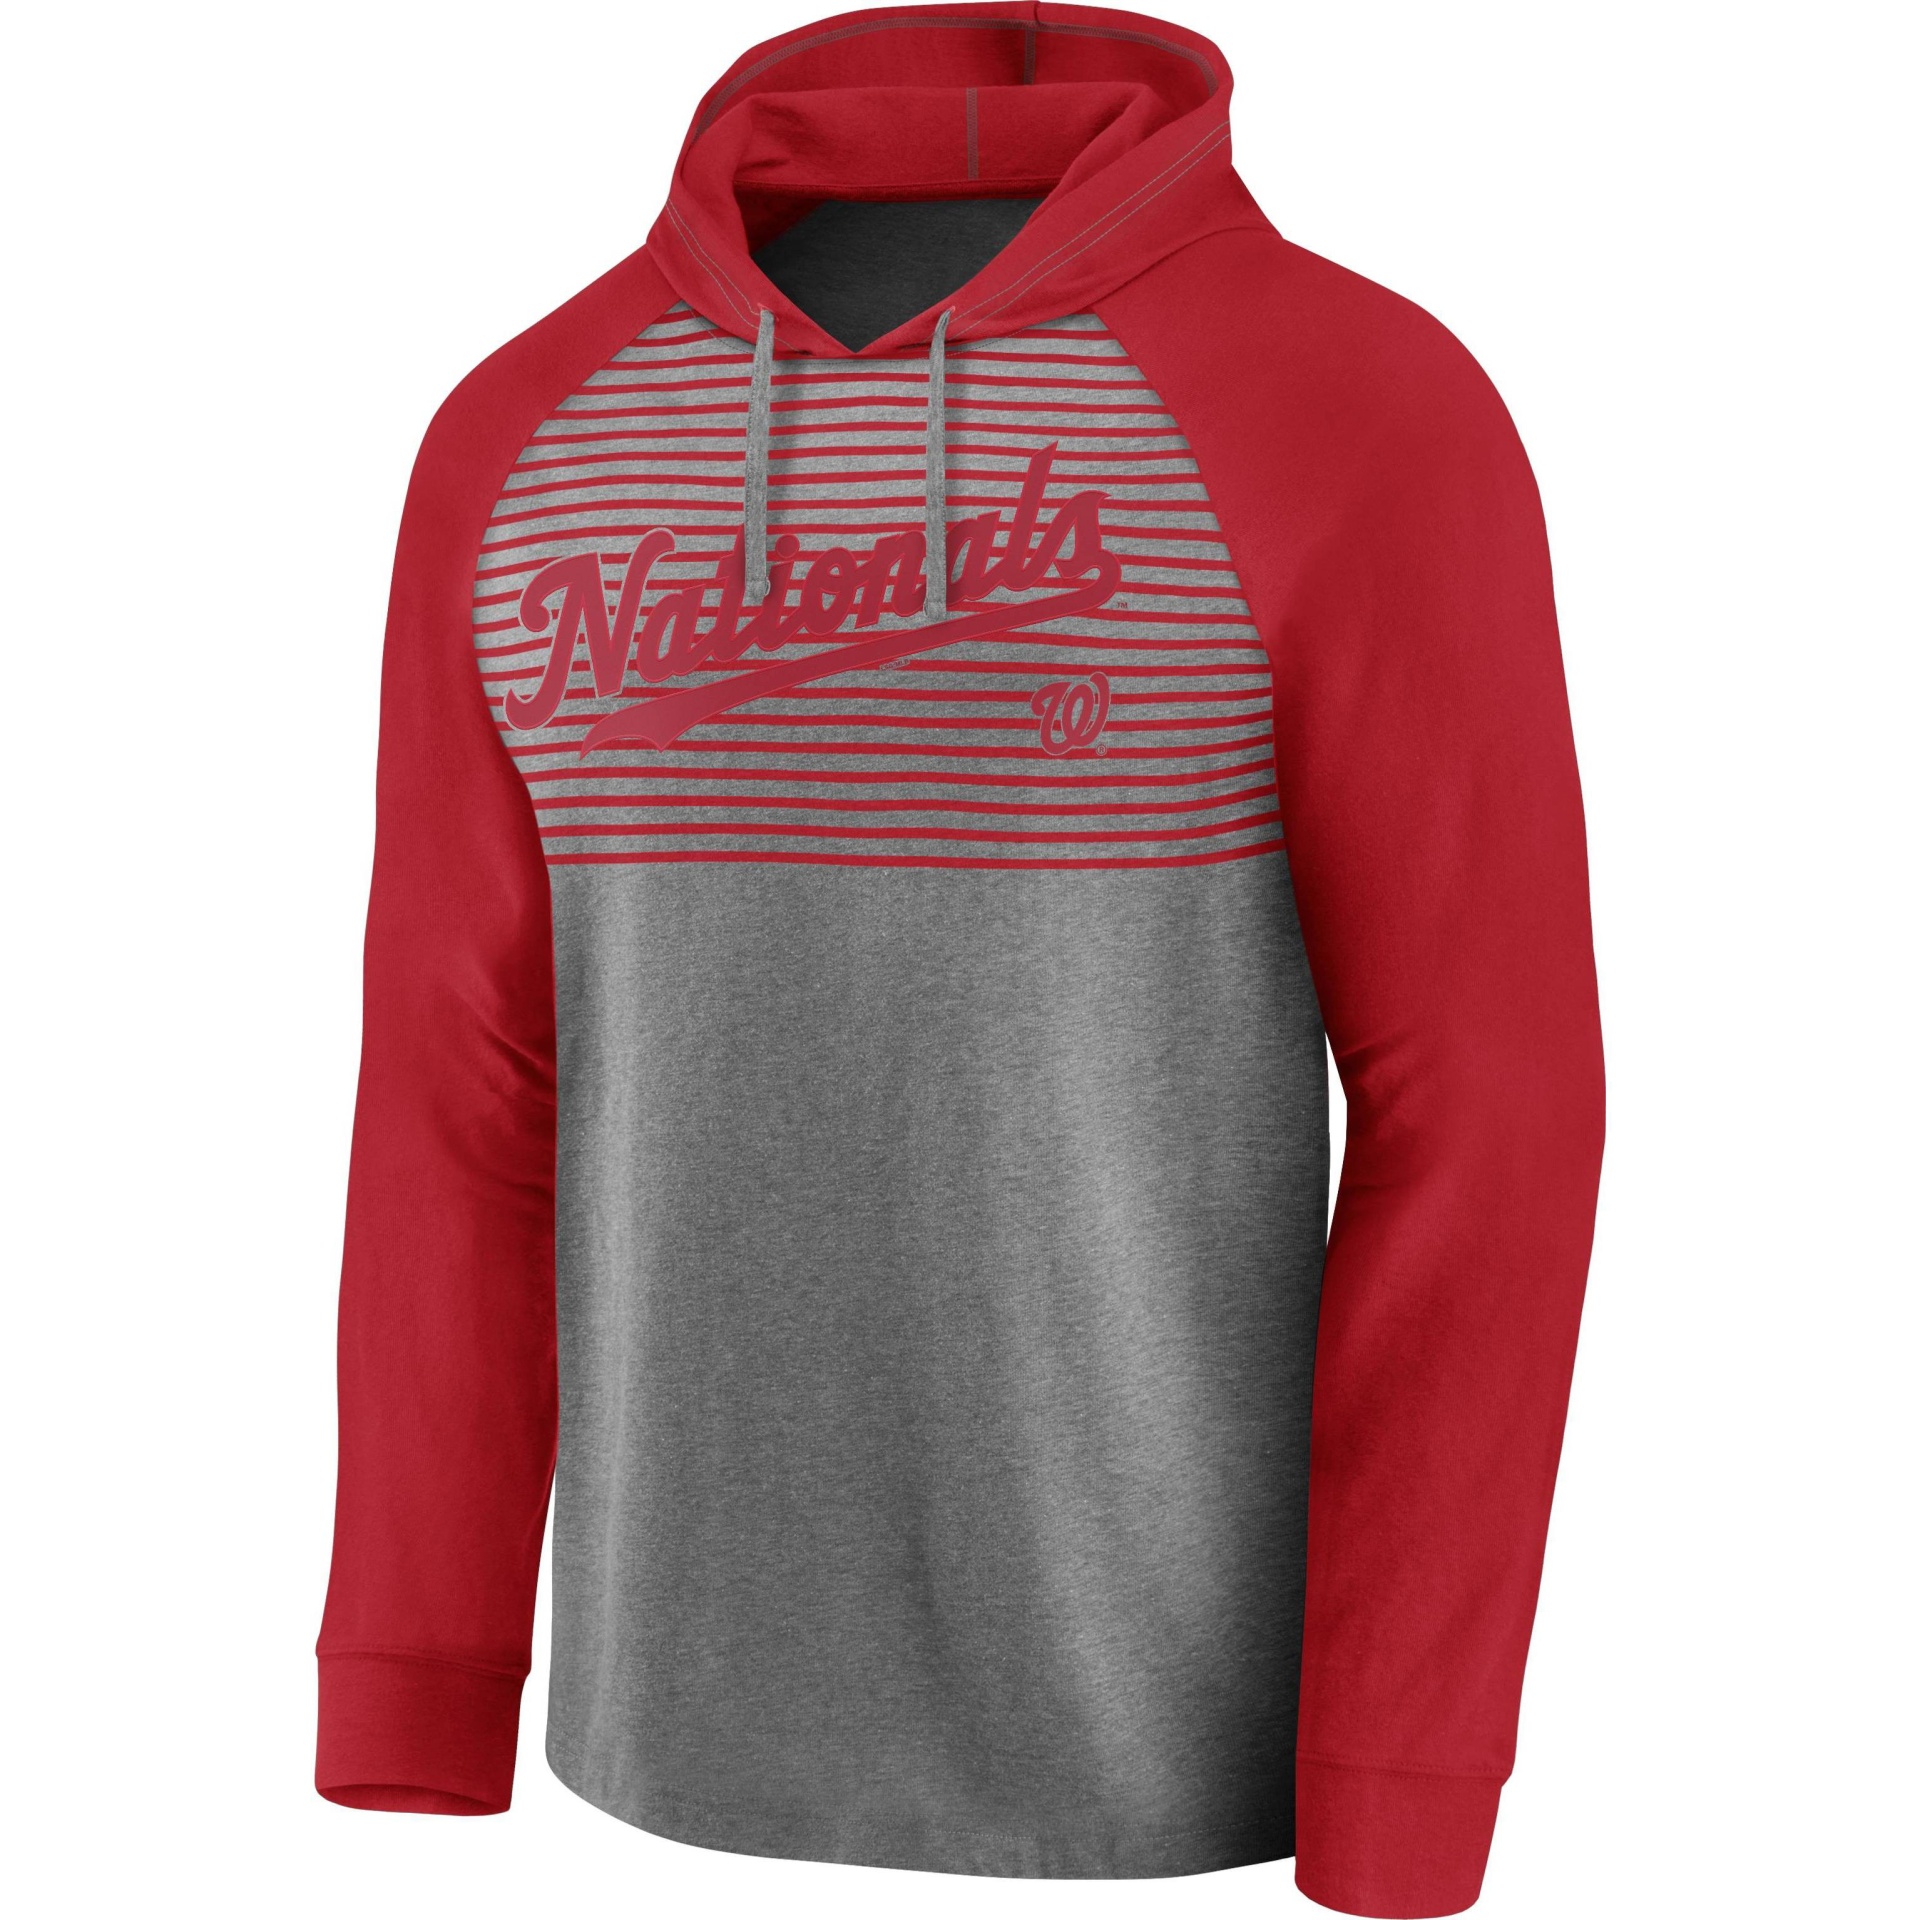 MLB Men's Sweatshirt - Red - XL